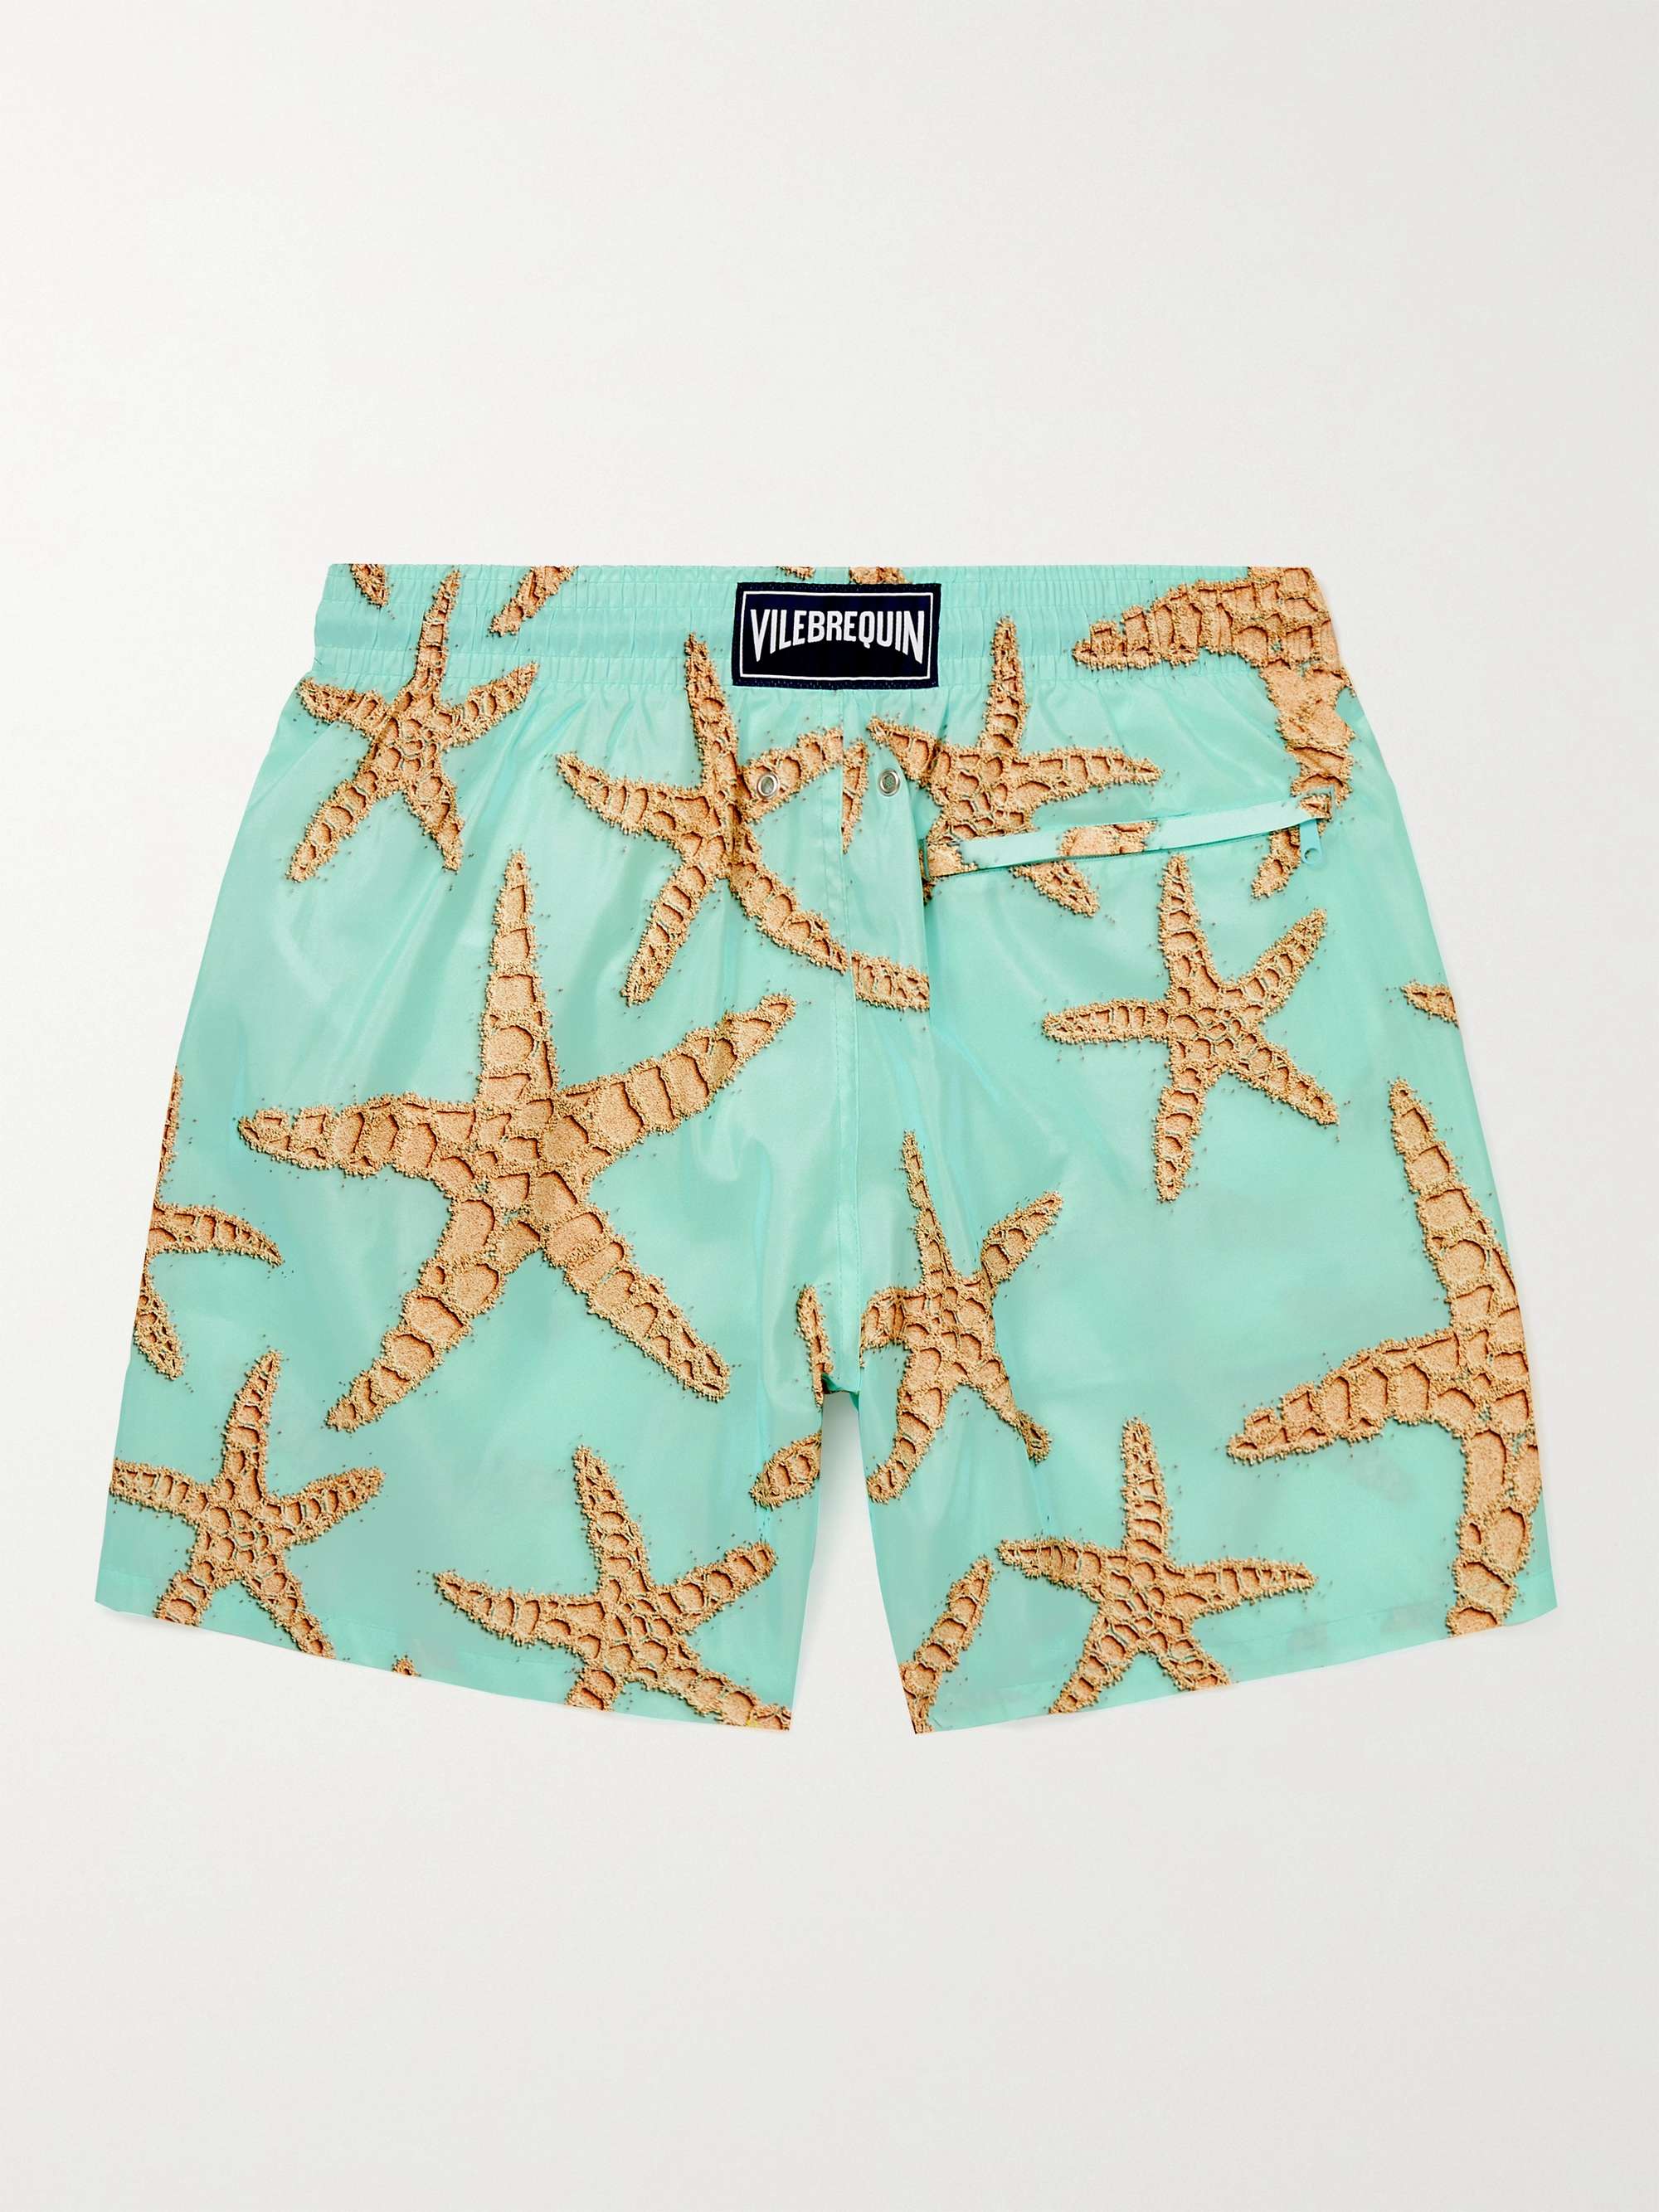 VILEBREQUIN Mahina Mid-Length Printed Swim Shorts